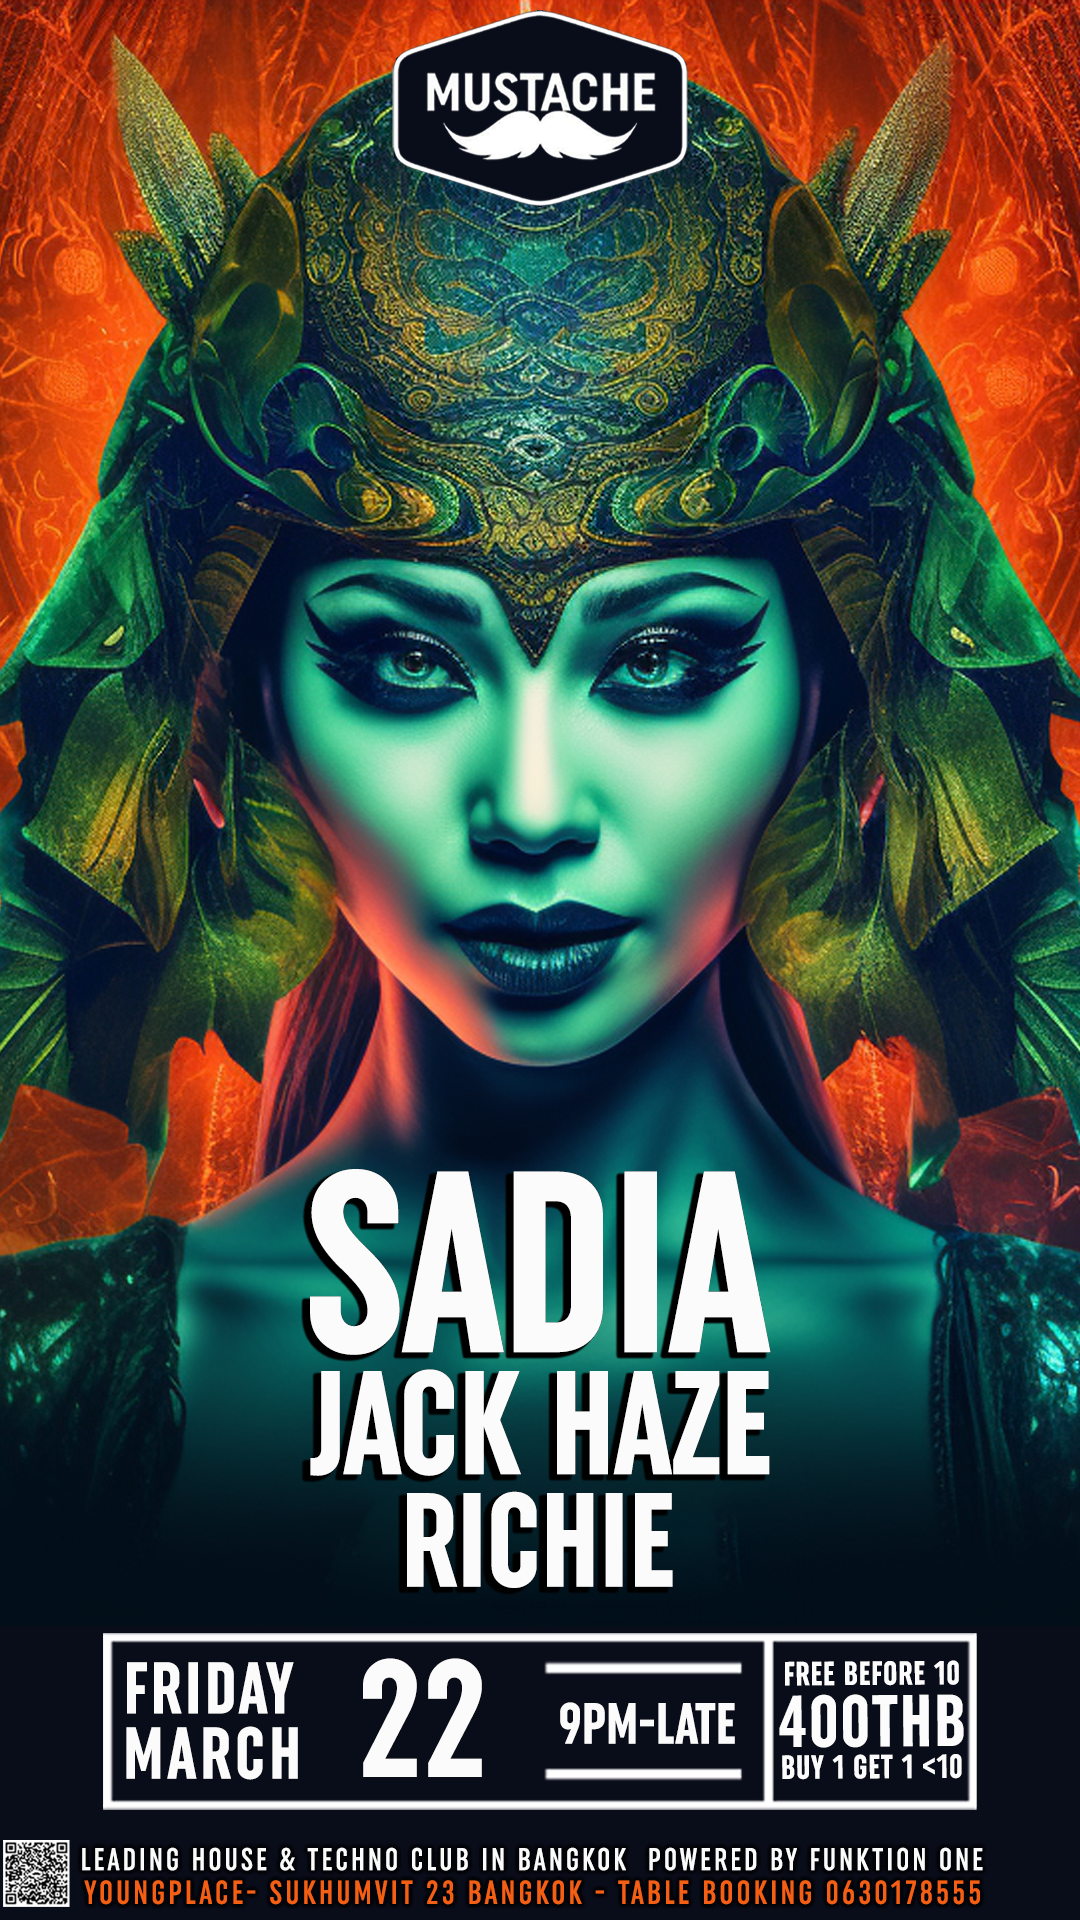 SADIA - Jack Haze - RICHIE I Mustache Bangkok - Página trasera